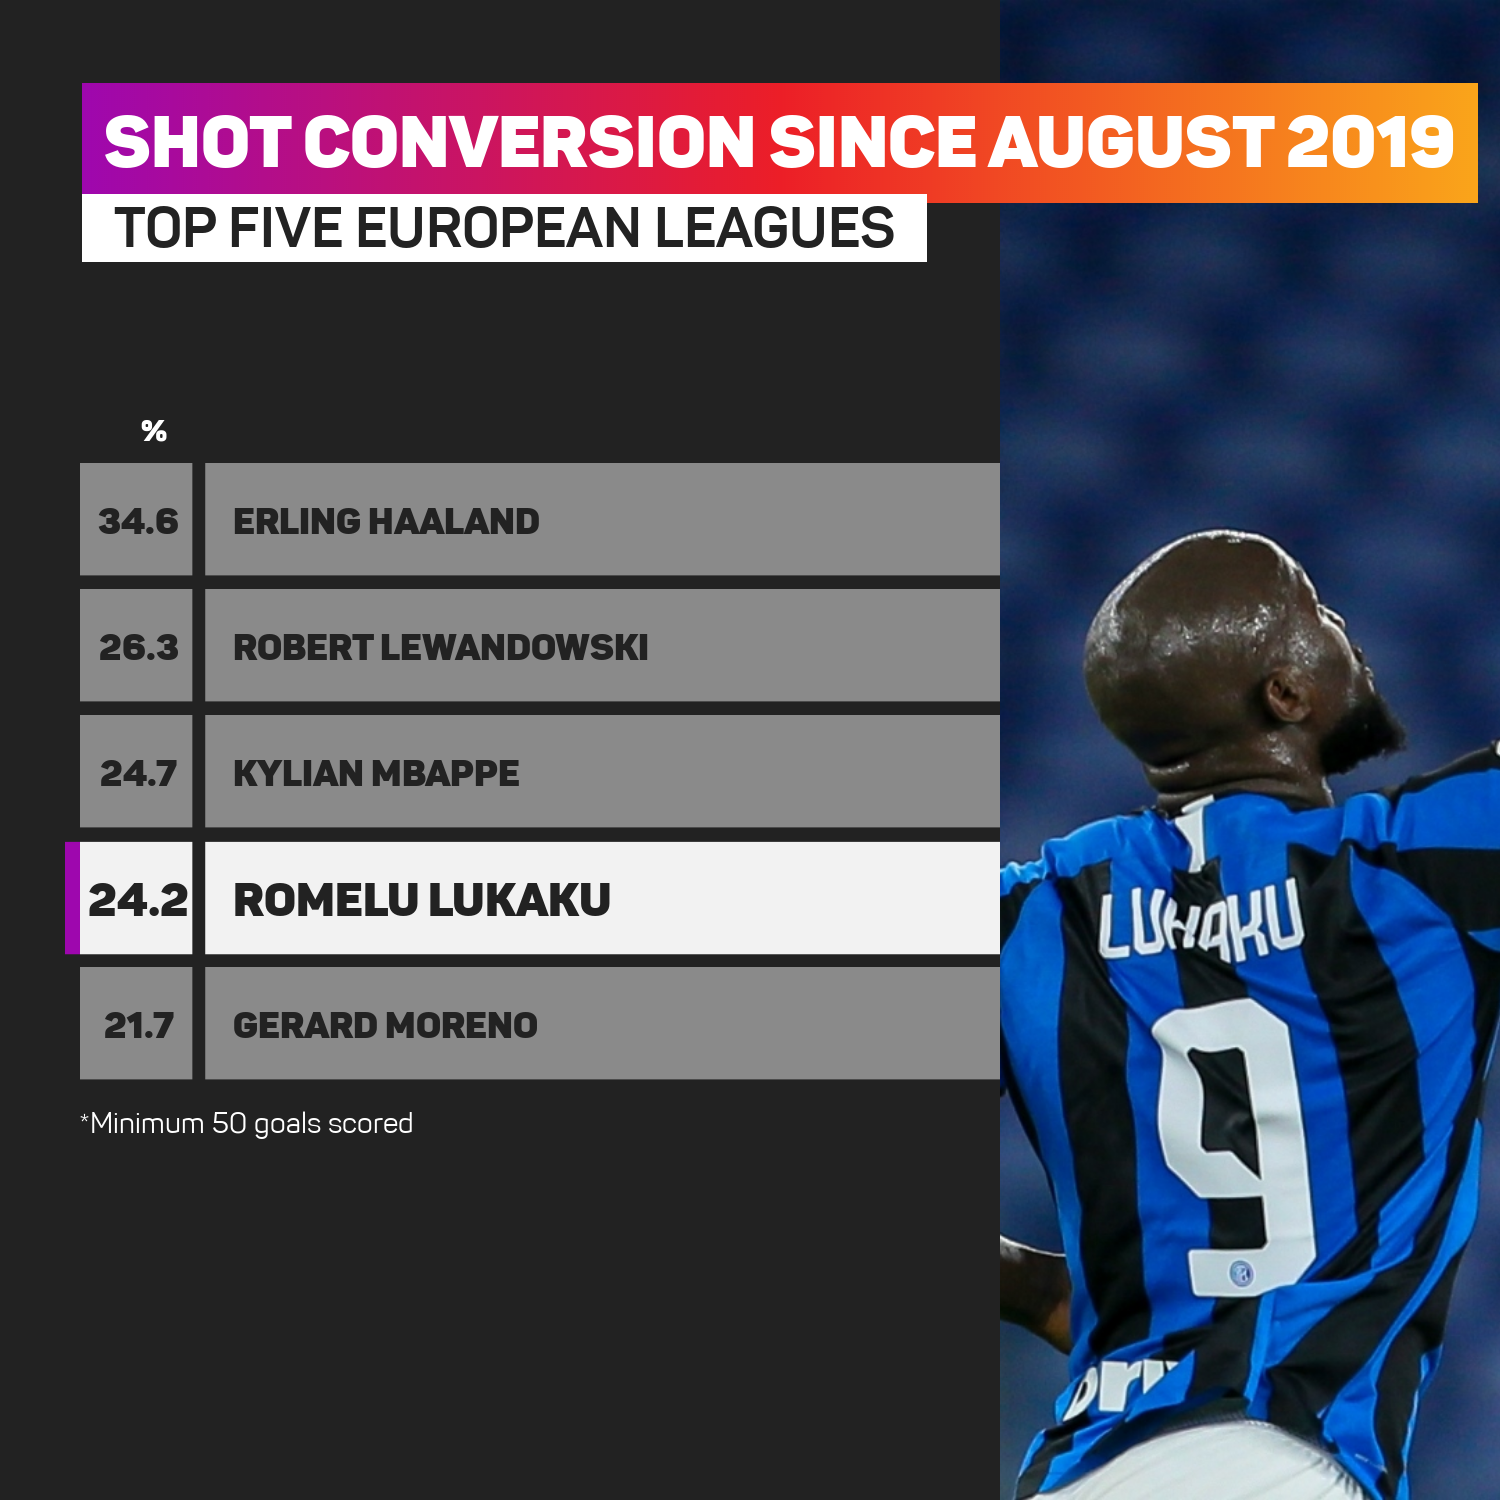 Romelu Lukaku's shot conversion for Inter